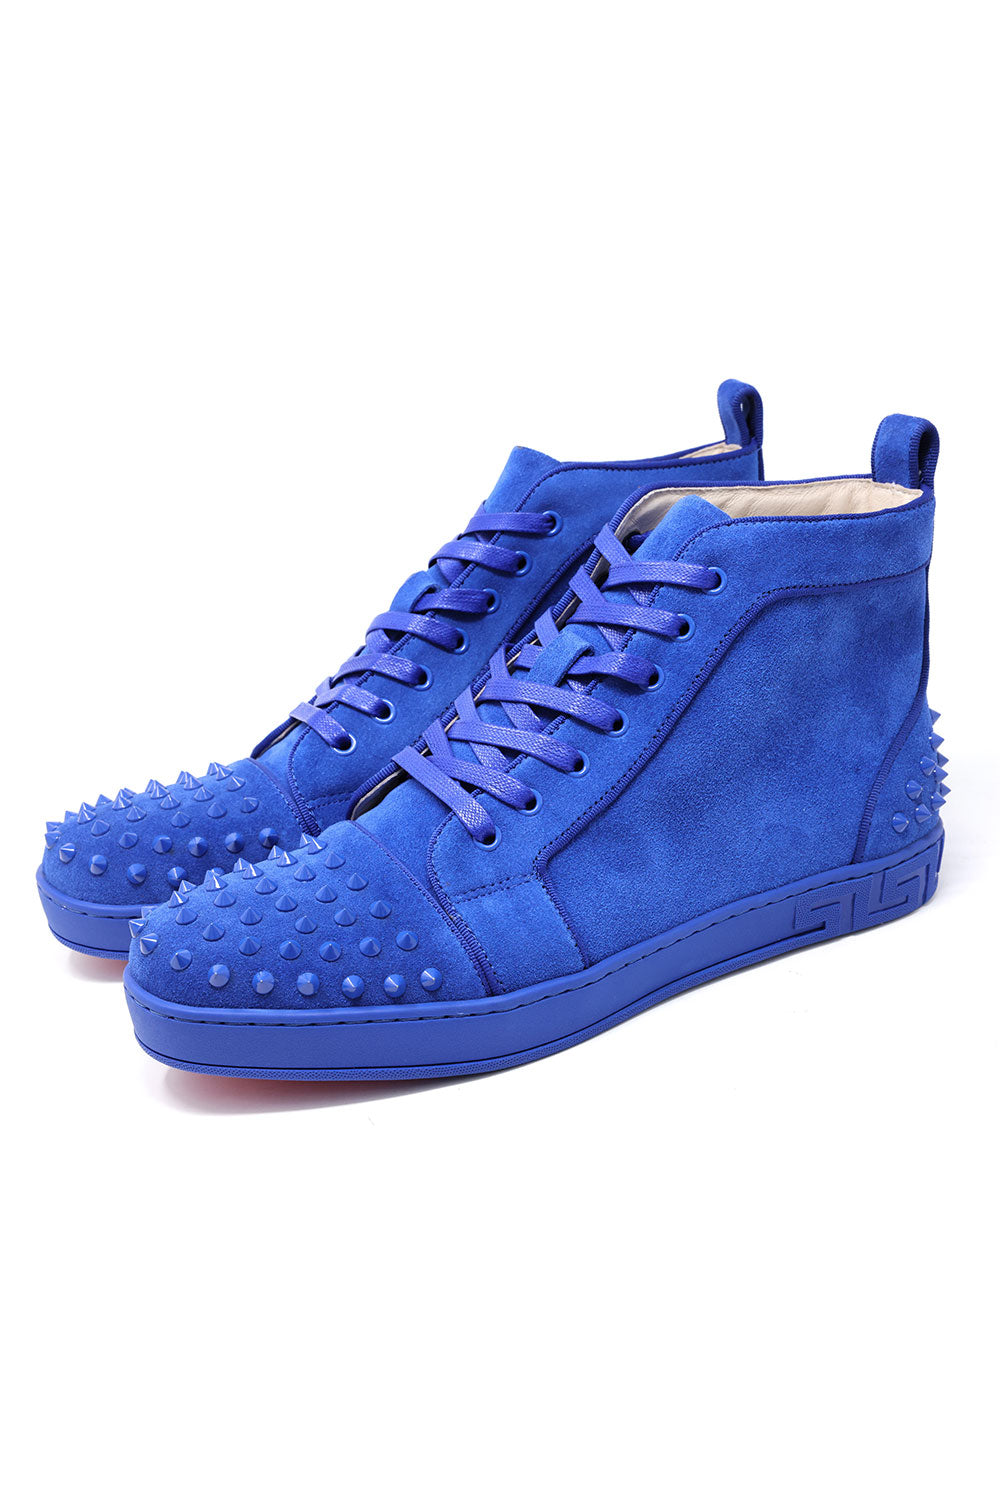 Barabas Men's Spike Design Luxury Suede High-Top Sneaker SH732 Blue